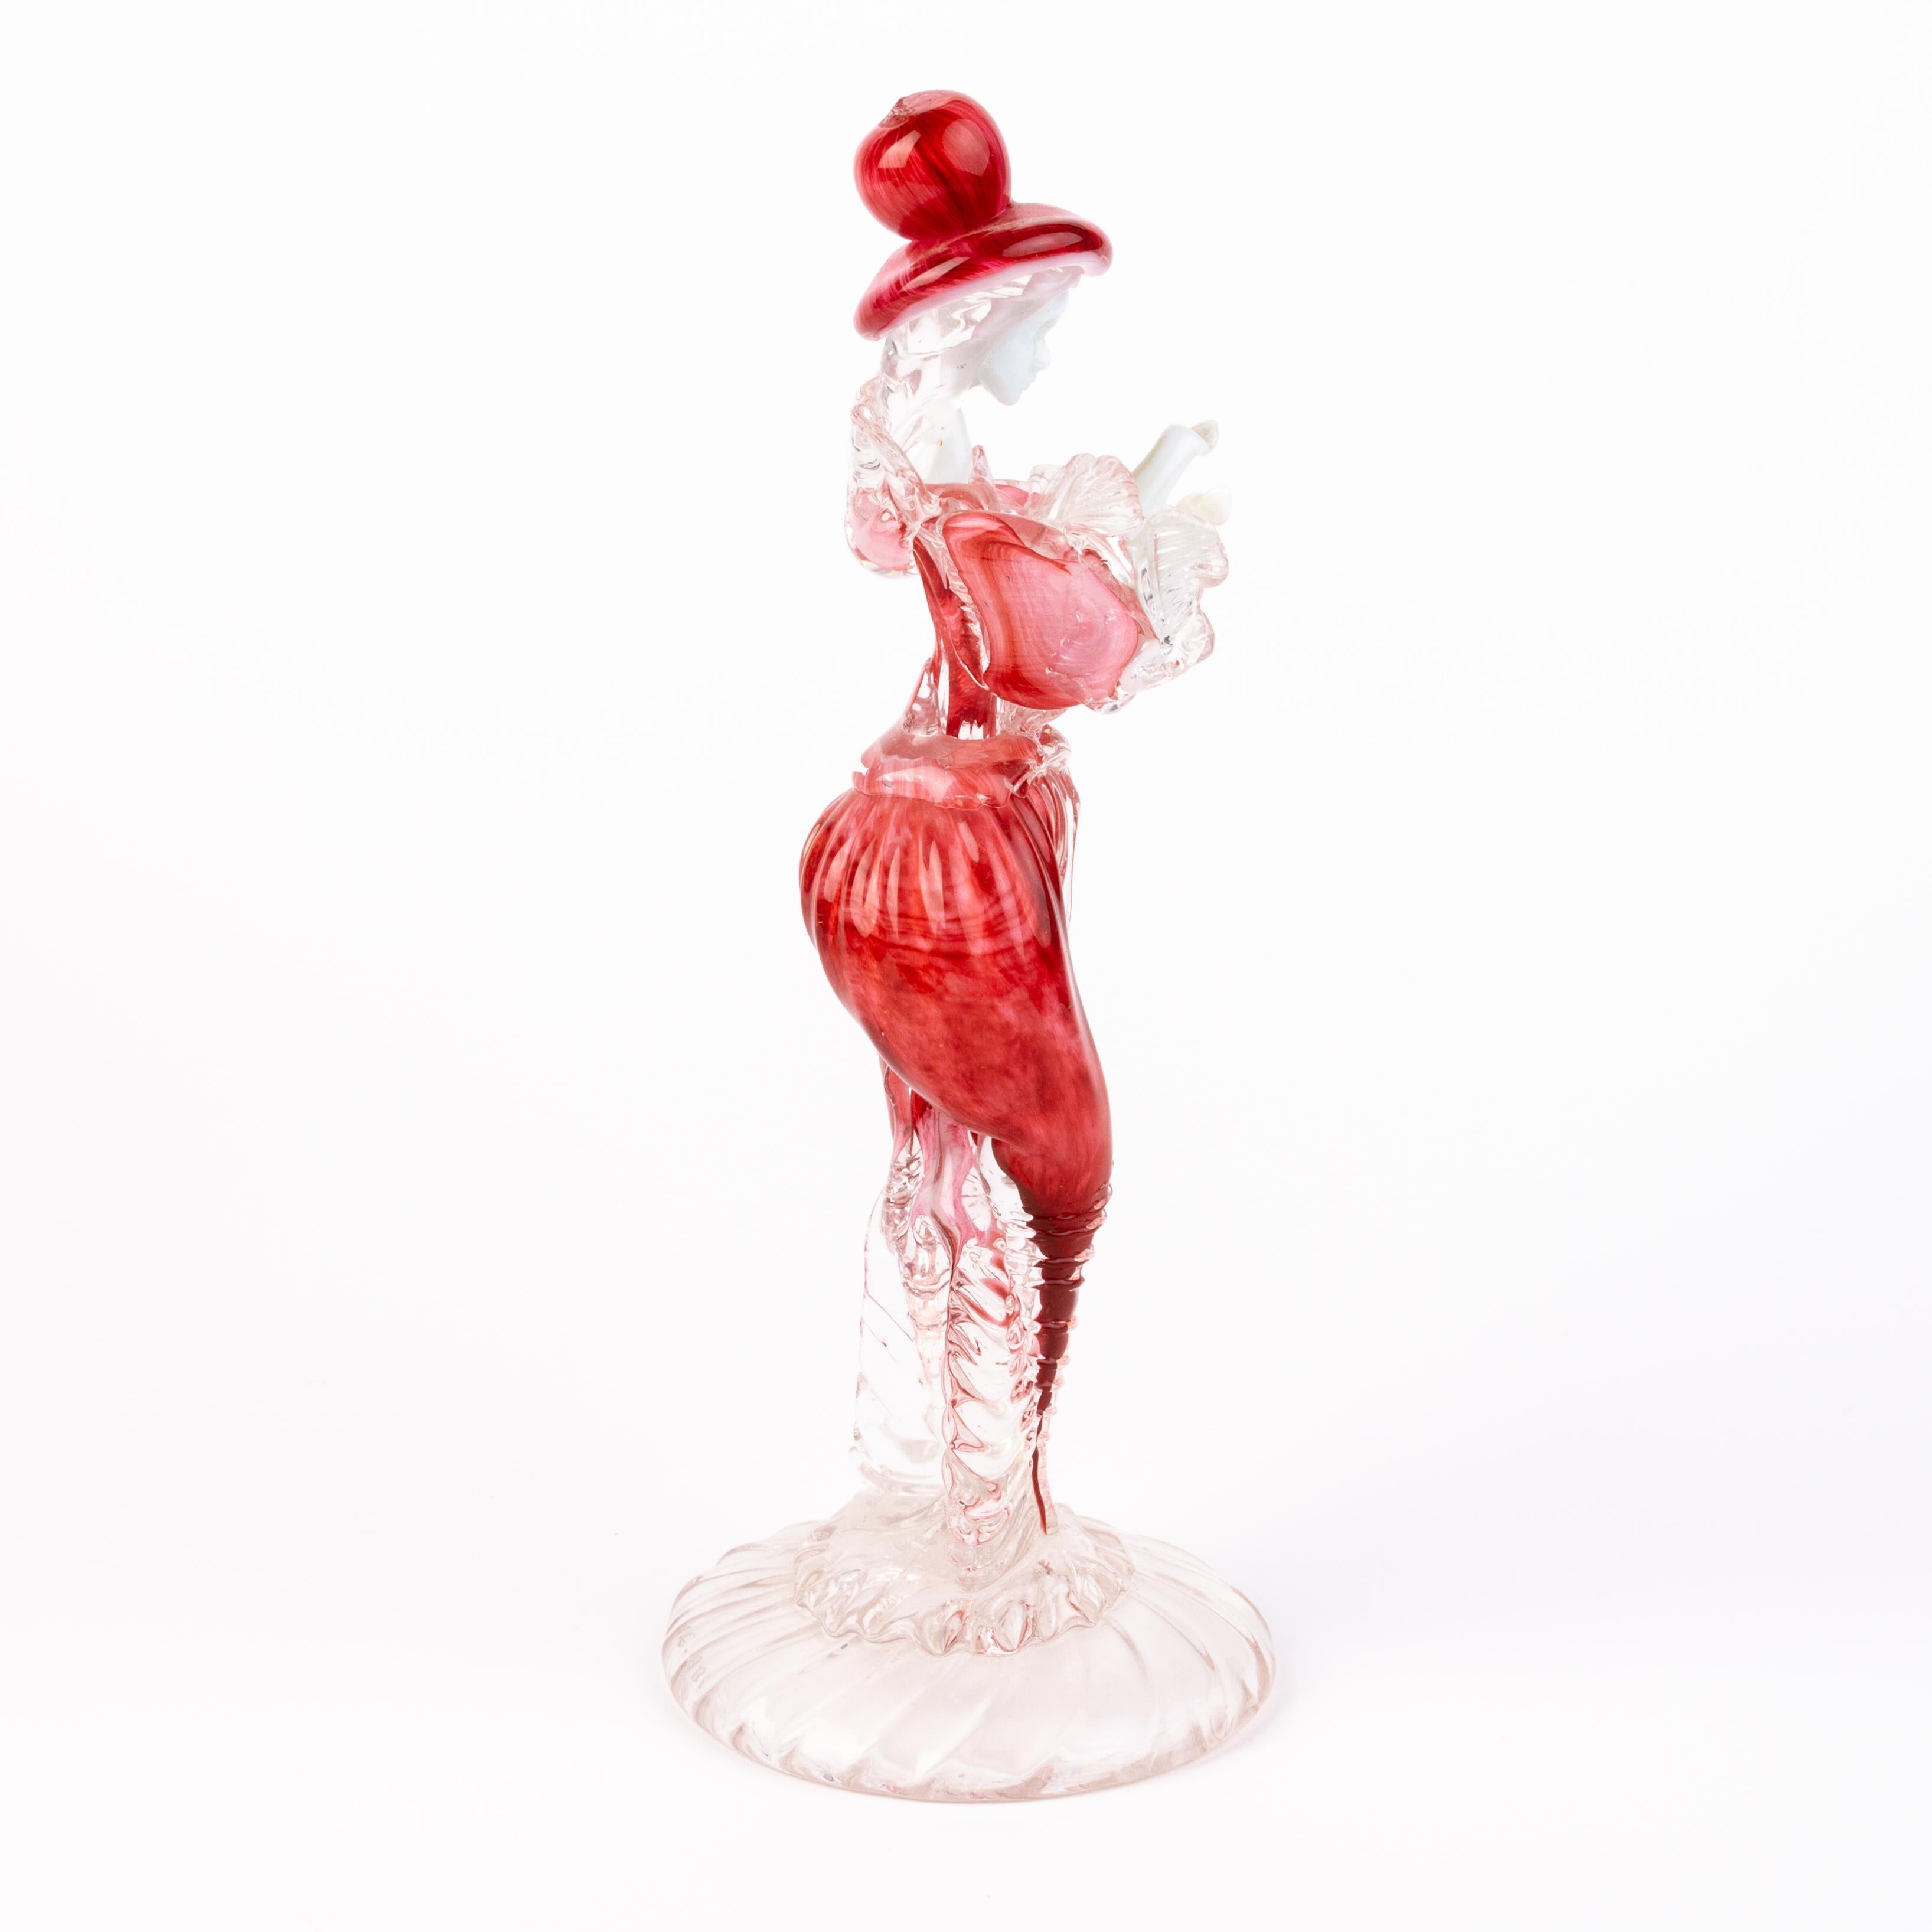 Murano Venetian Glass Sculpture Dancer
Good condition
Free international shipping.